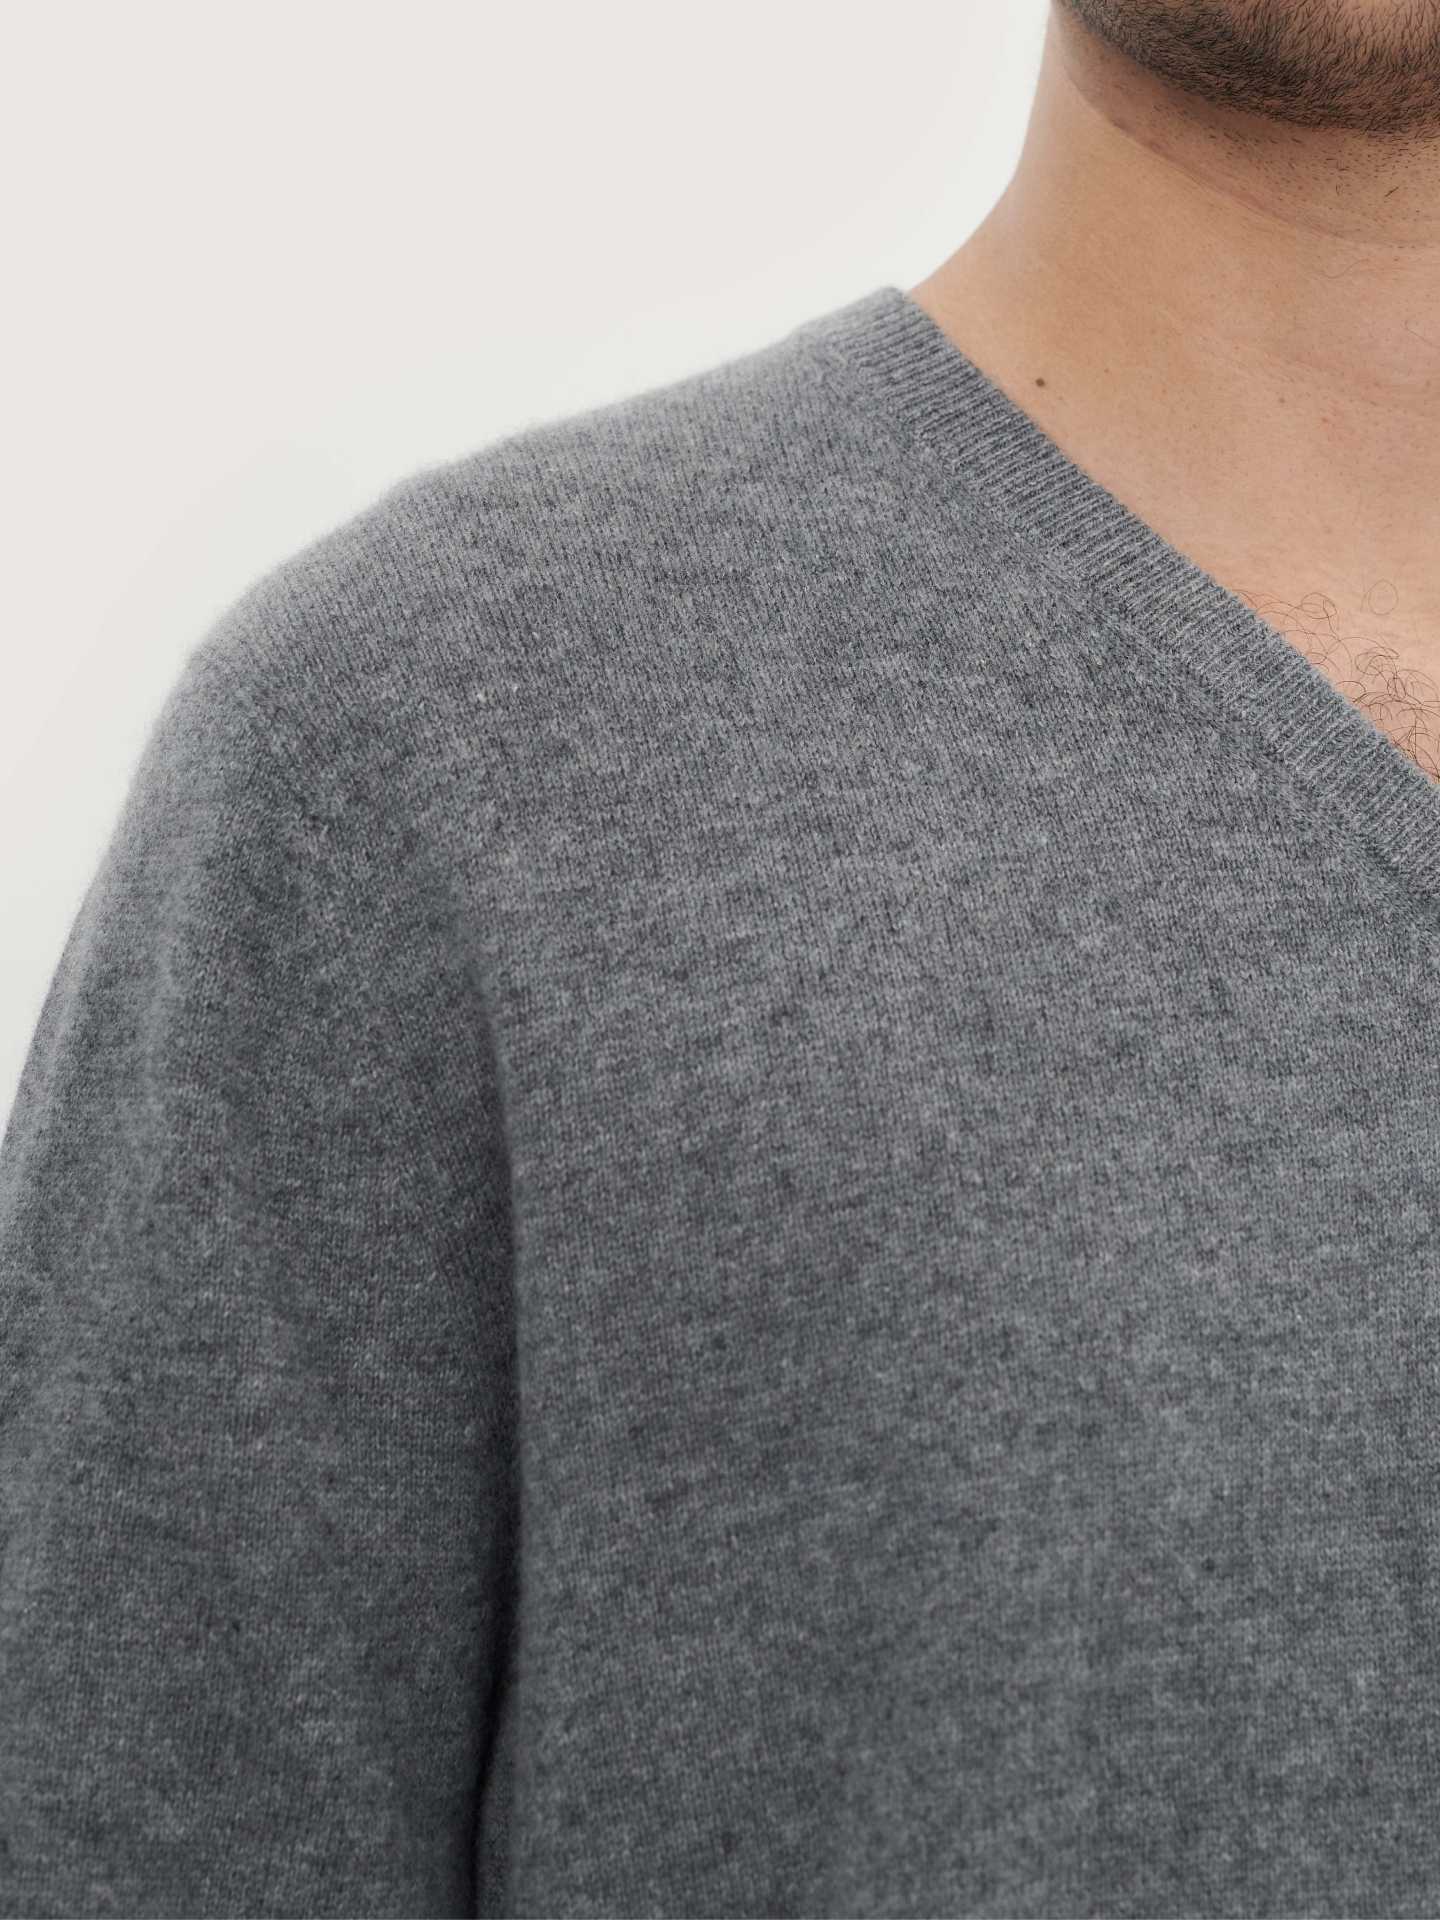 Men's Cashmere Basic V-Neck Sweater Gray - Gobi Cashmere